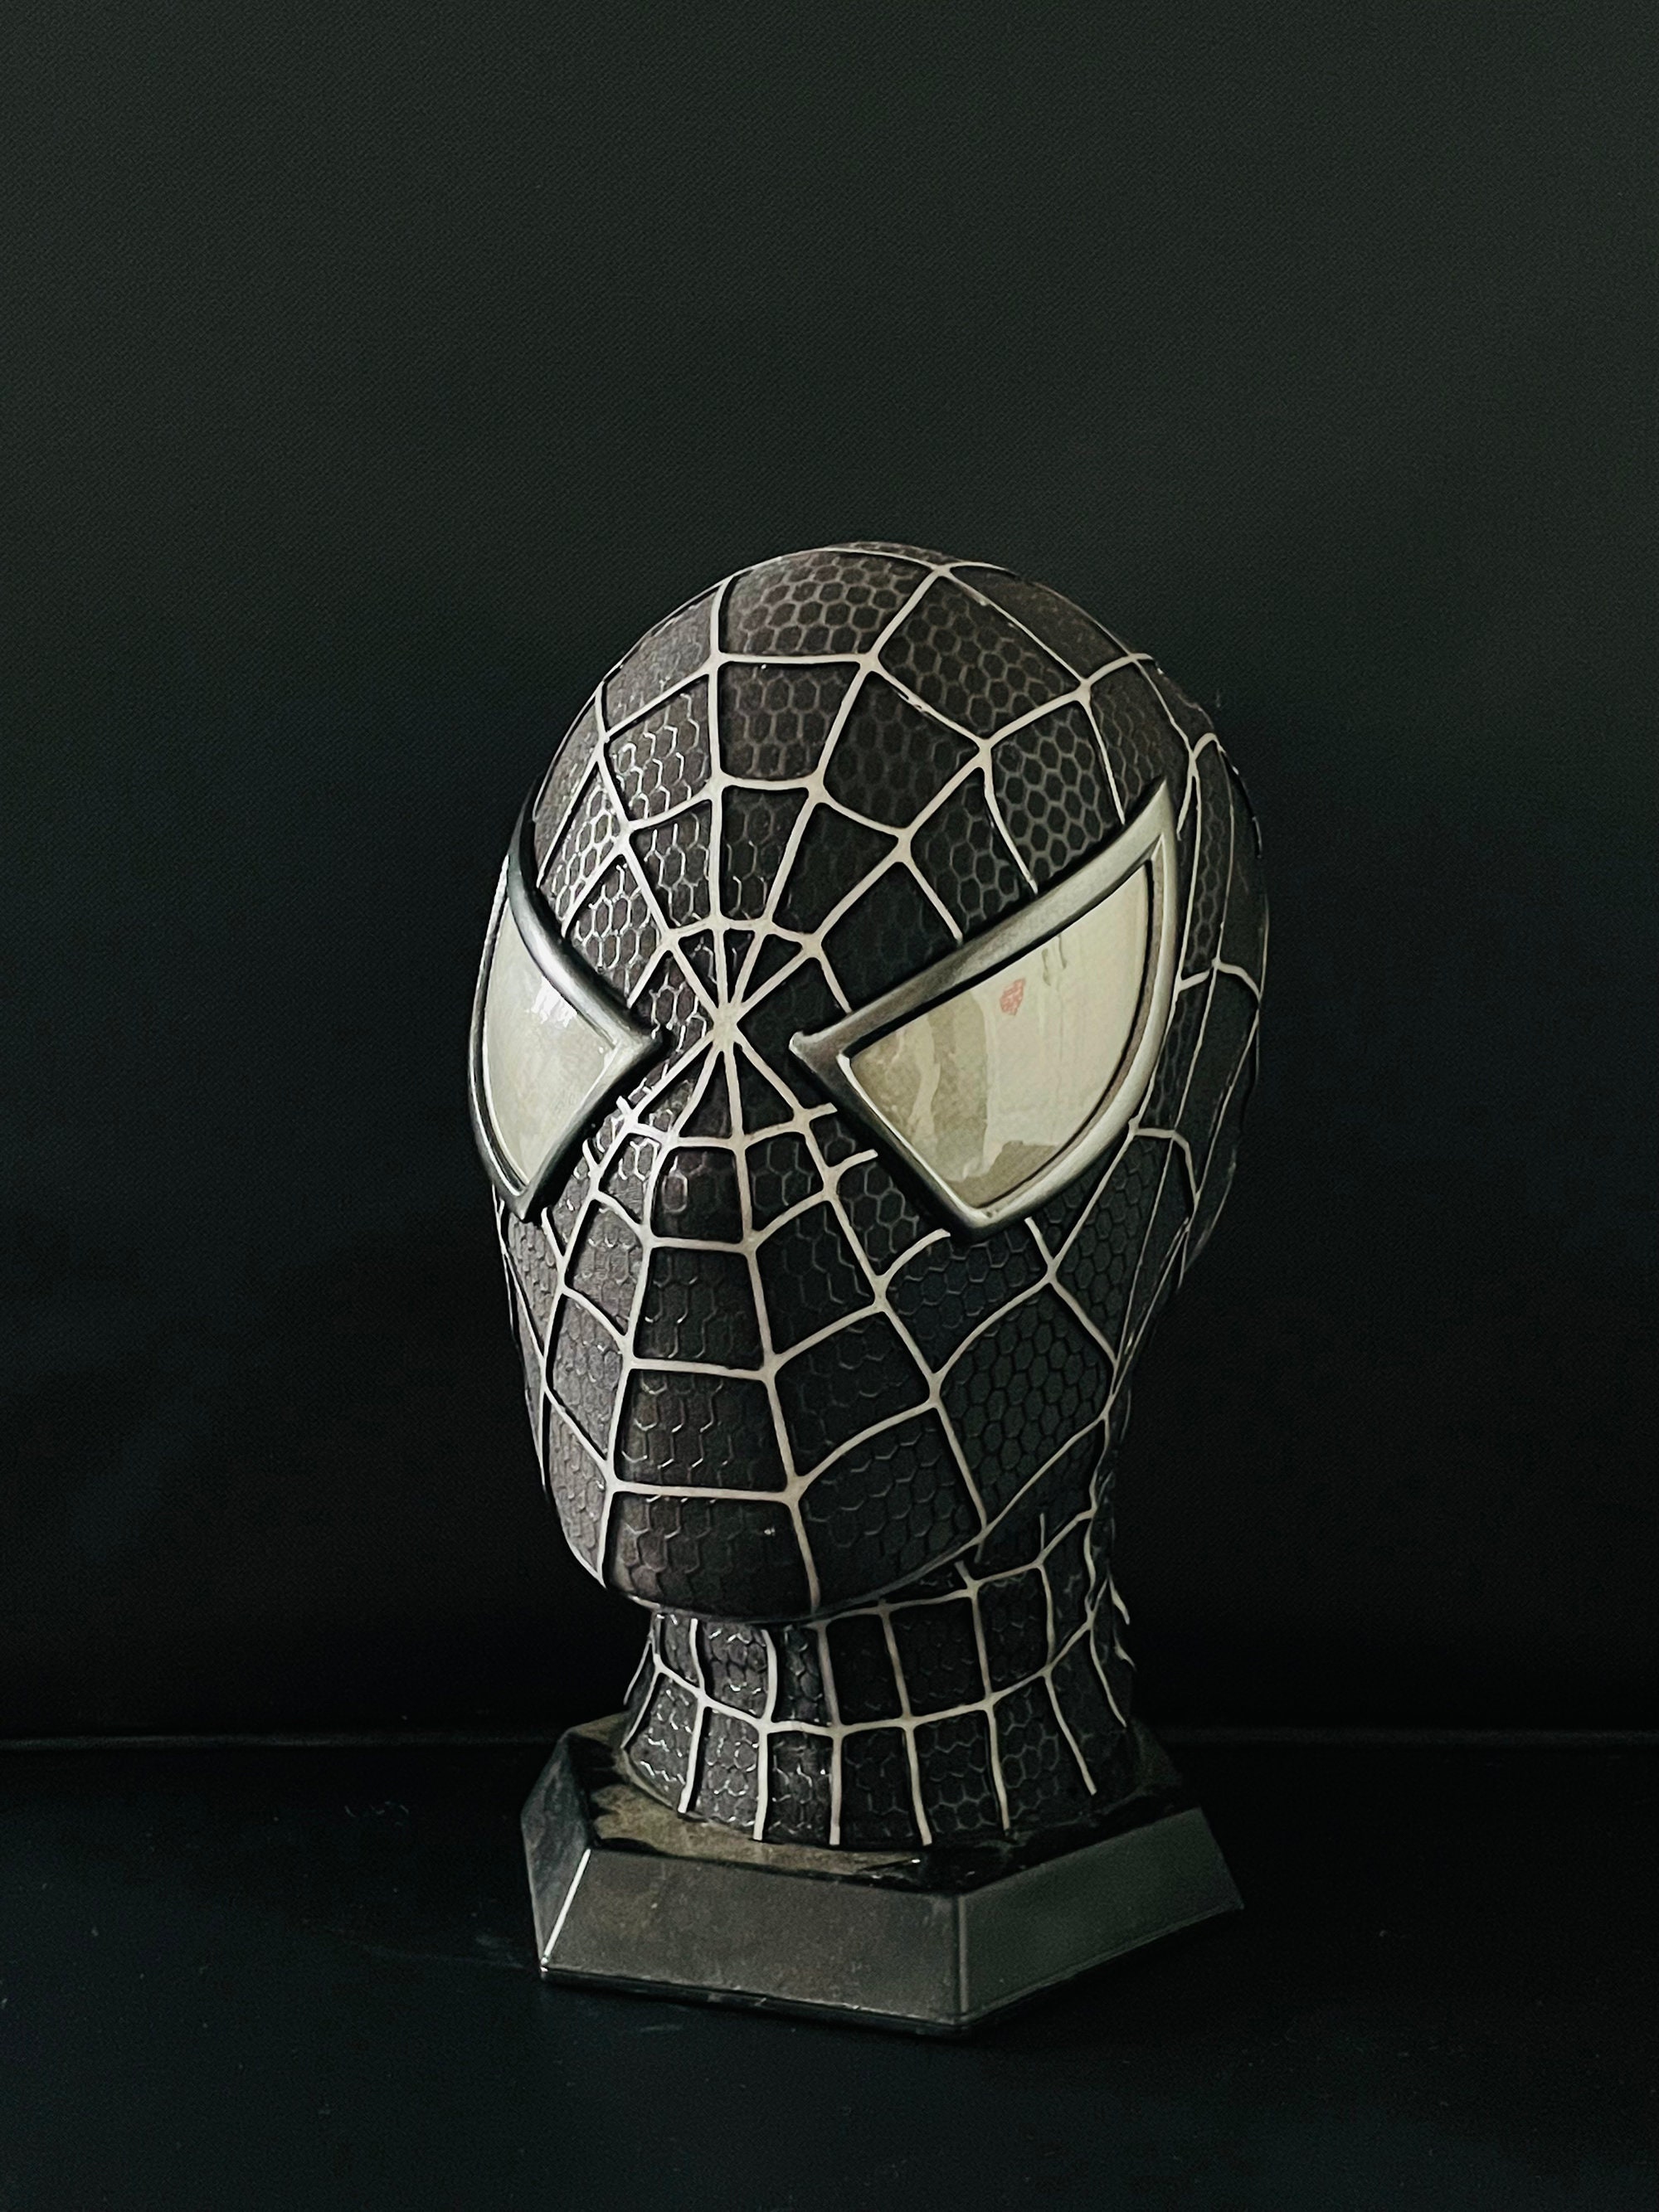 Neversoft Spider-Man Pattern V1 Deamcast and PC Version 